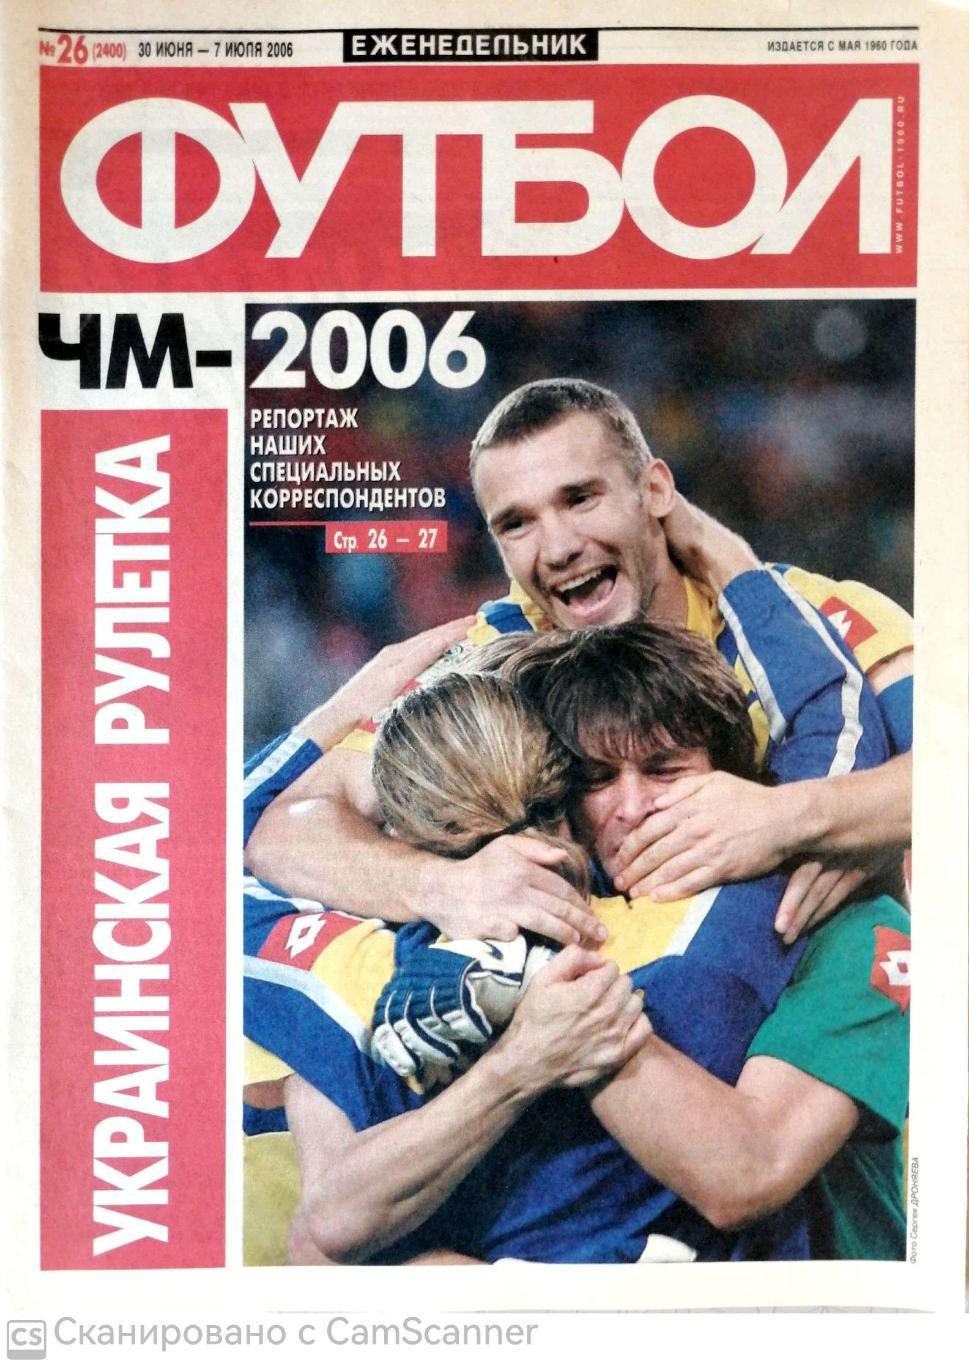 Еженедельник «Футбол» (Москва). 2006 год. №26